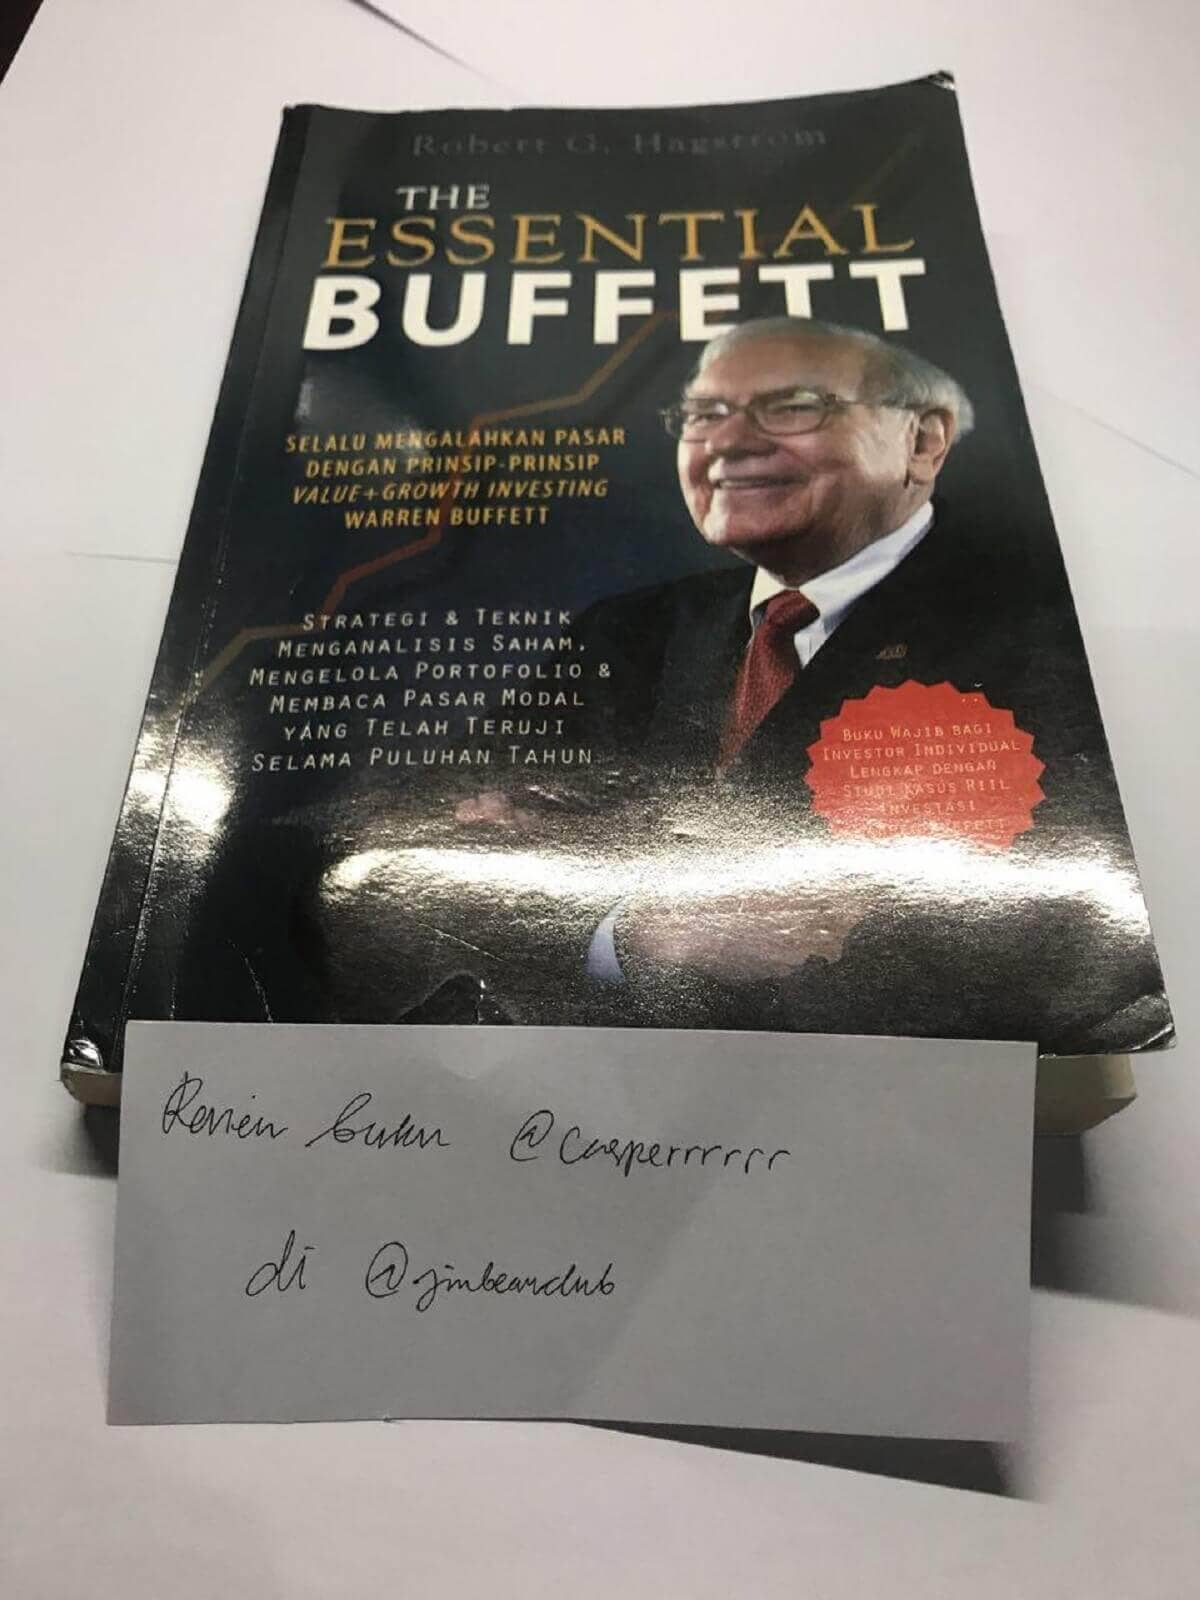 The Essential Buffett by Robert G. Hagstrom